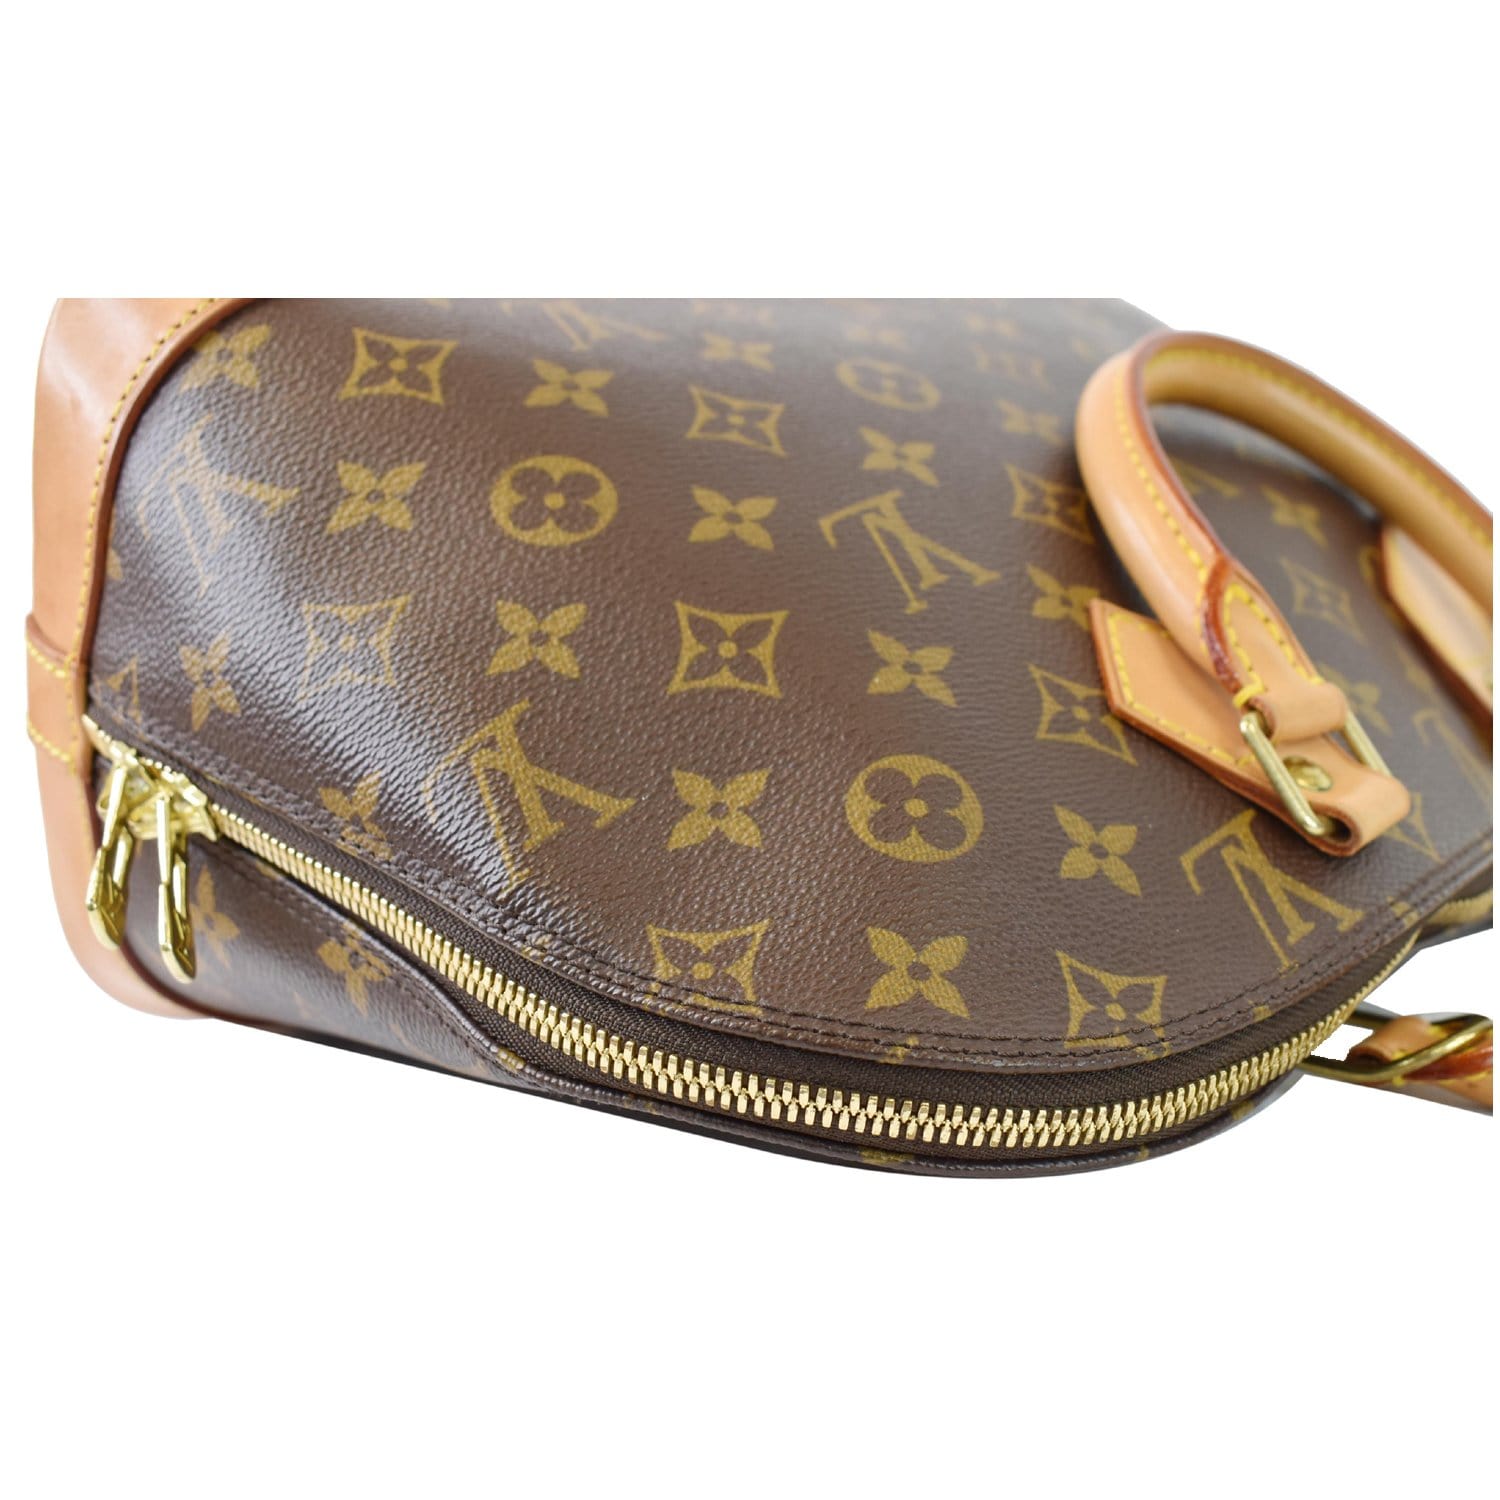 Pre-owned Louis Vuitton 2014 Monogram Vernis Alma Pm Handbag In